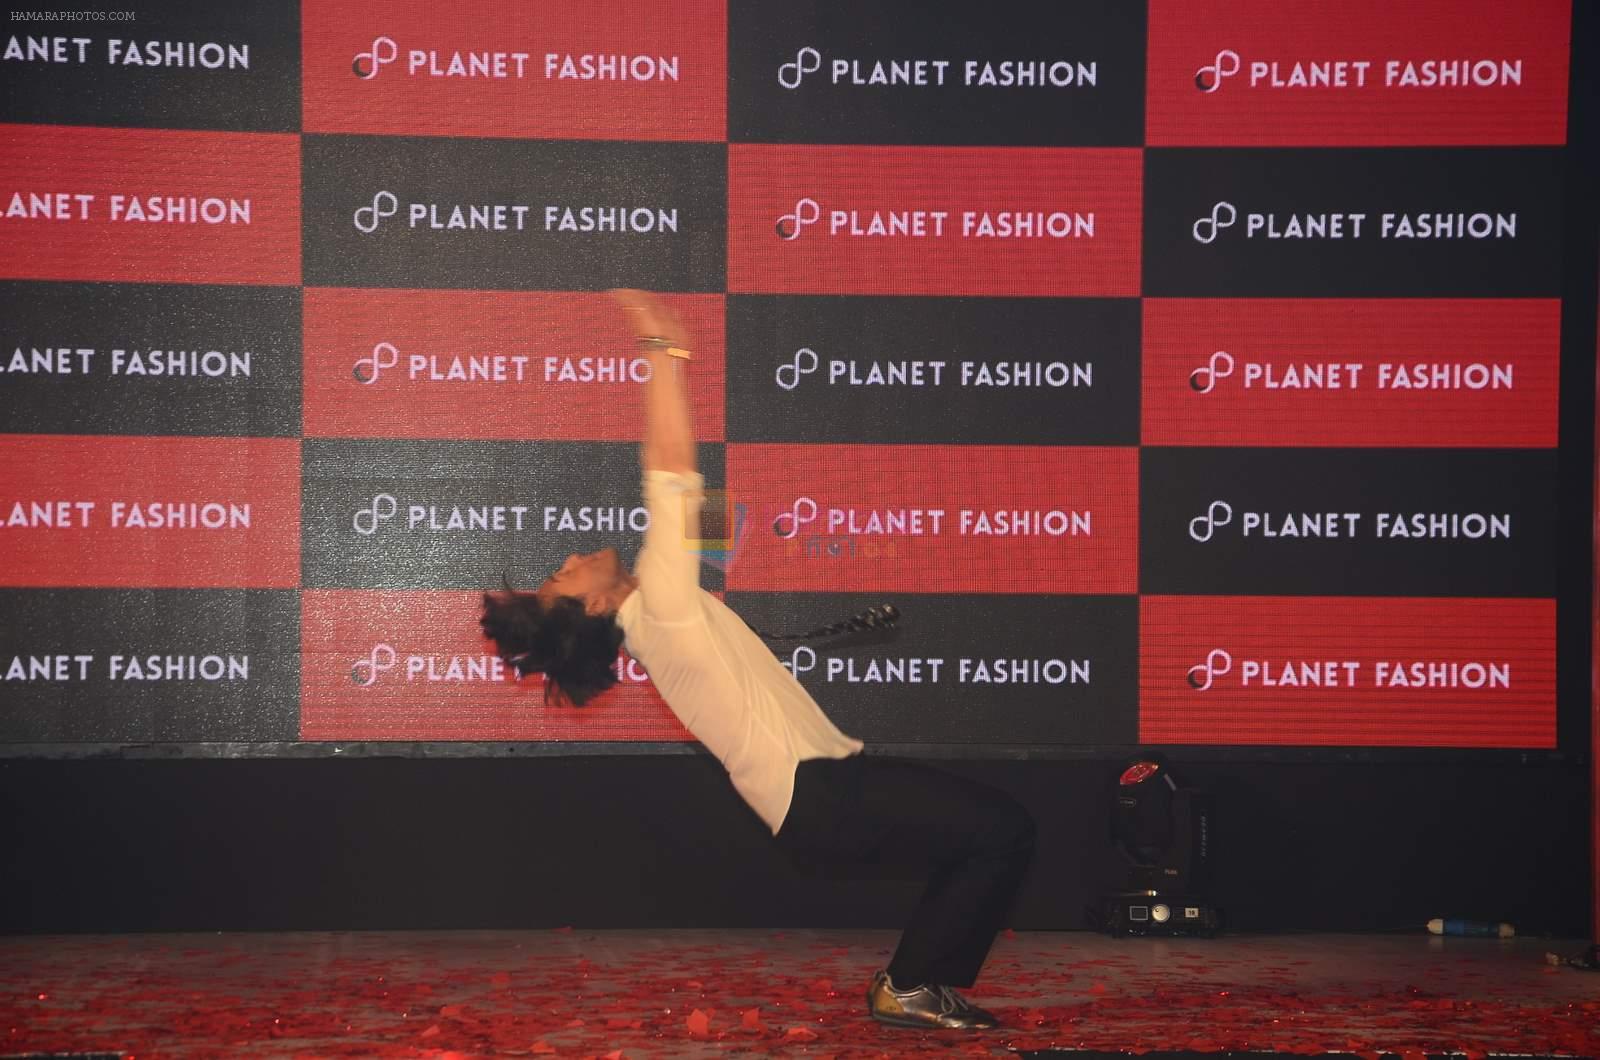 Tiger Shroff at Planet Fashion show in Taj Lands End on 1st July 2015